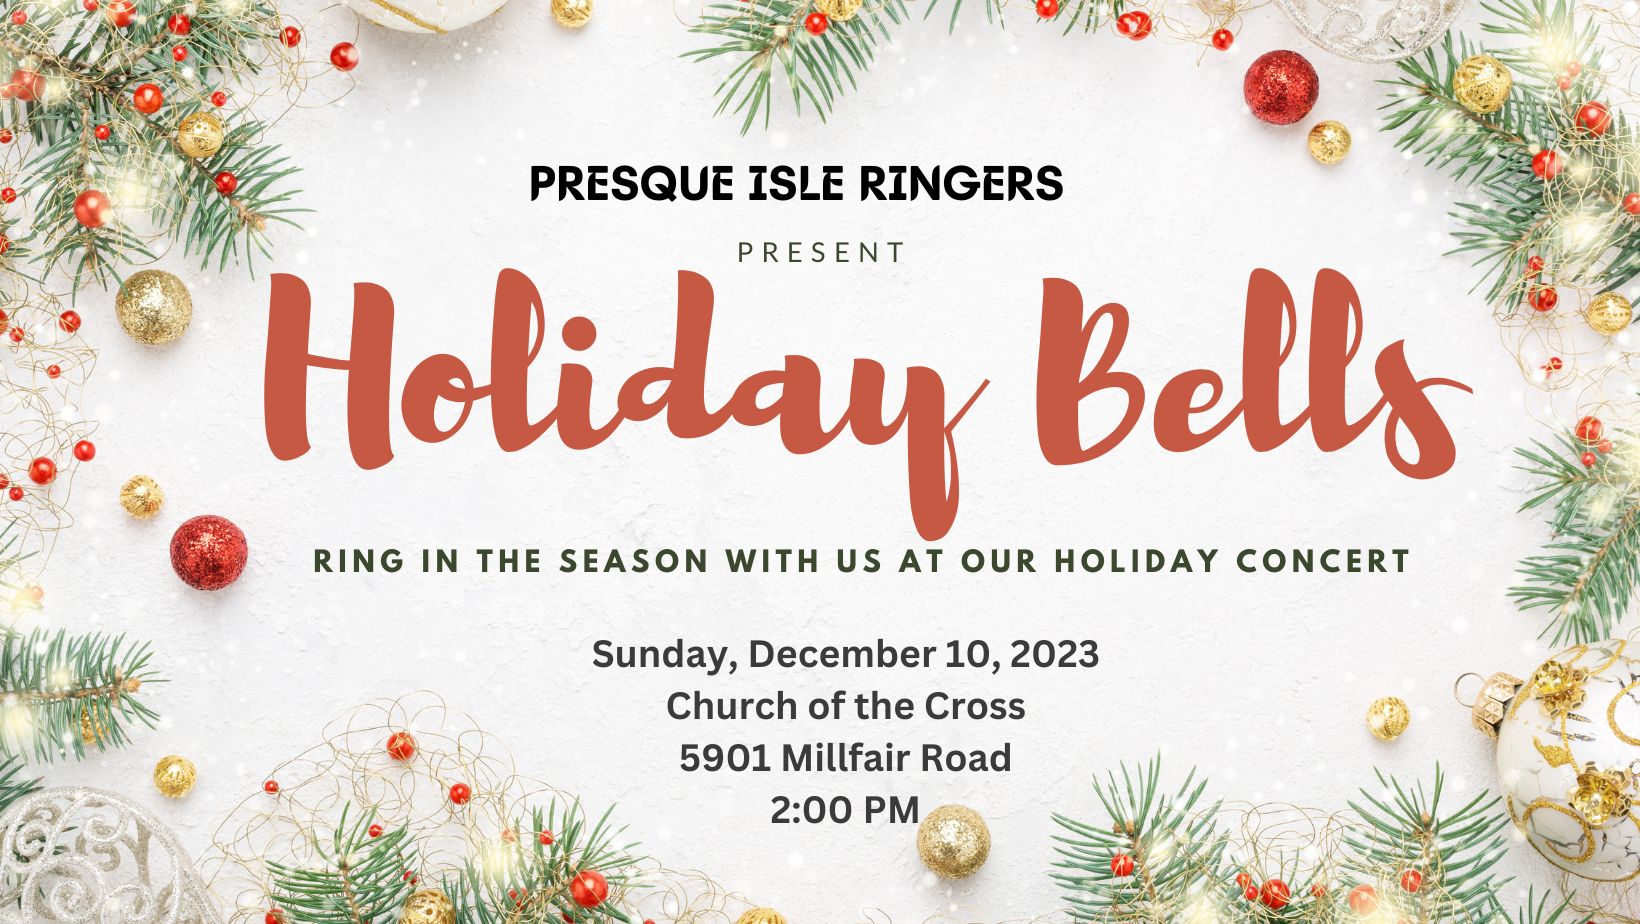 Presque Isle Ringers present Holiday Bells